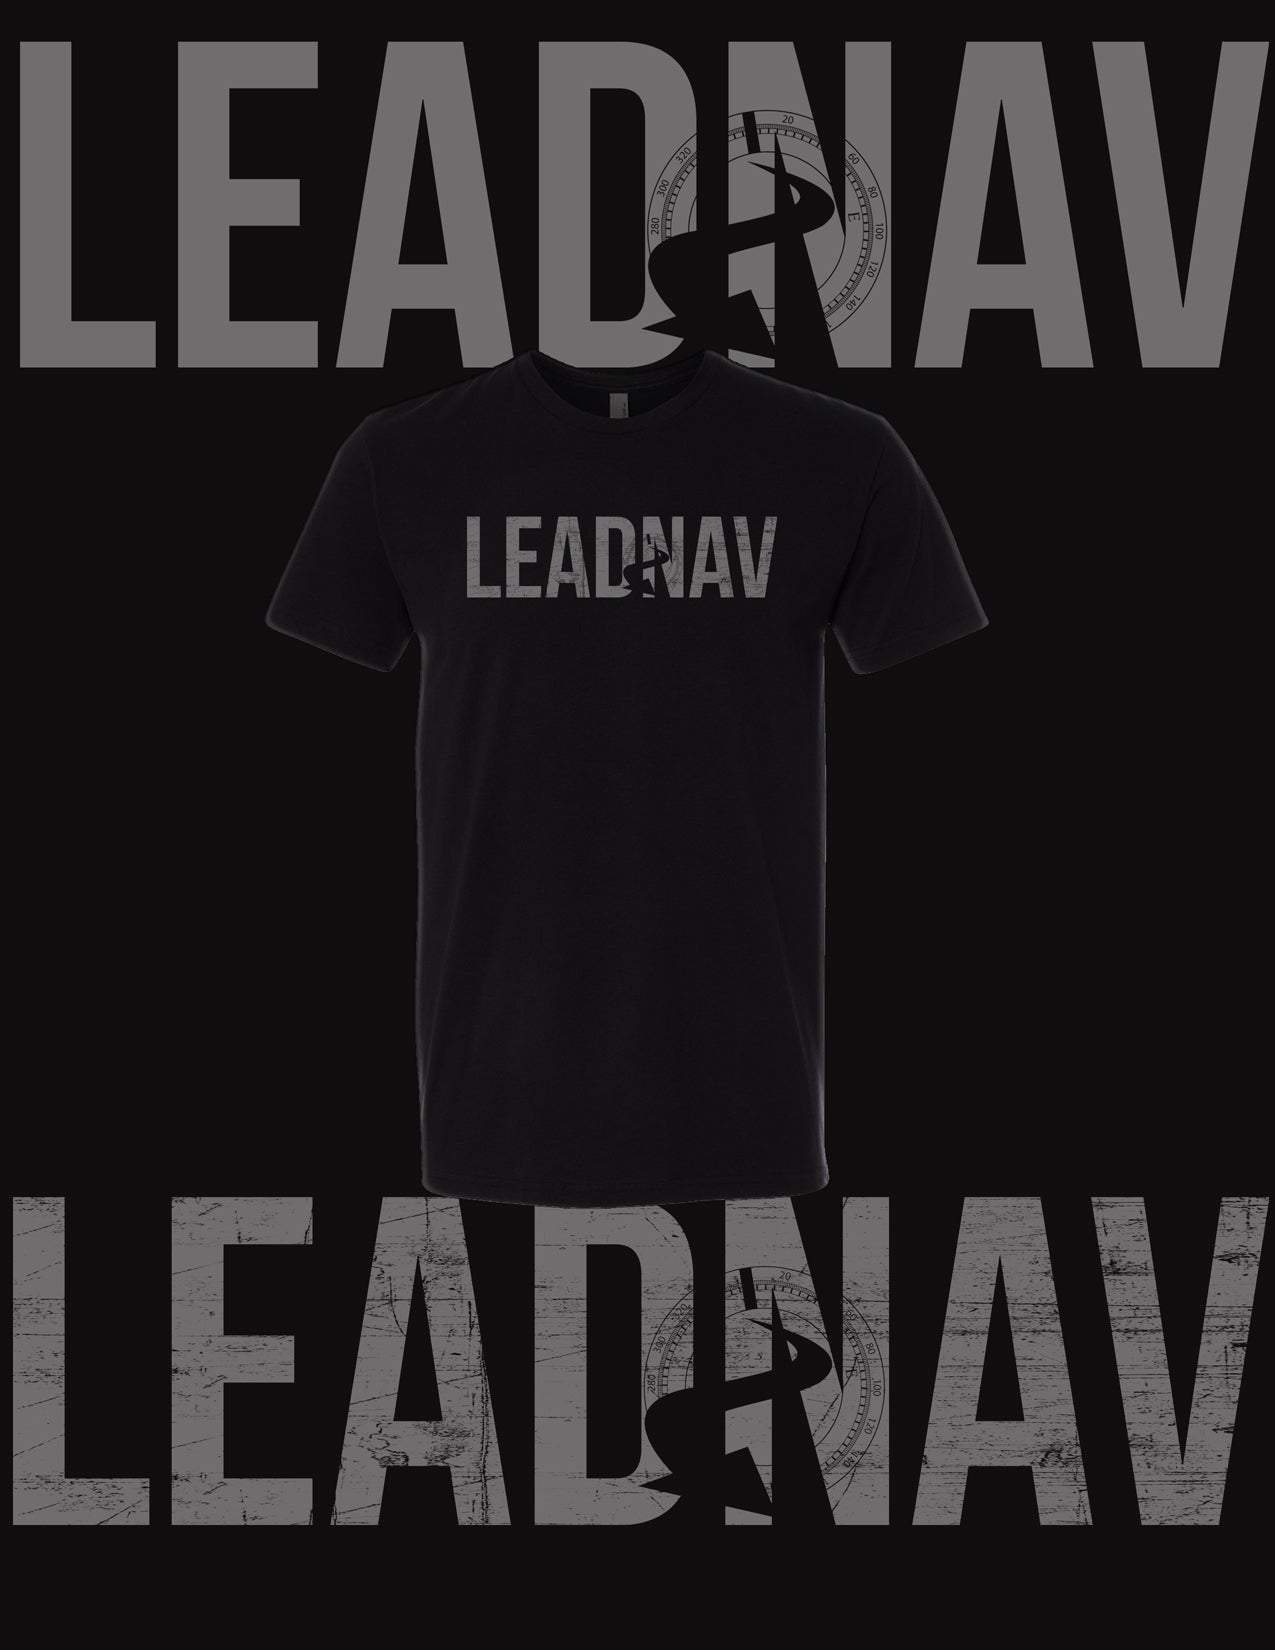 LEADNAV “LowVis” - Gray on Black - Distressed